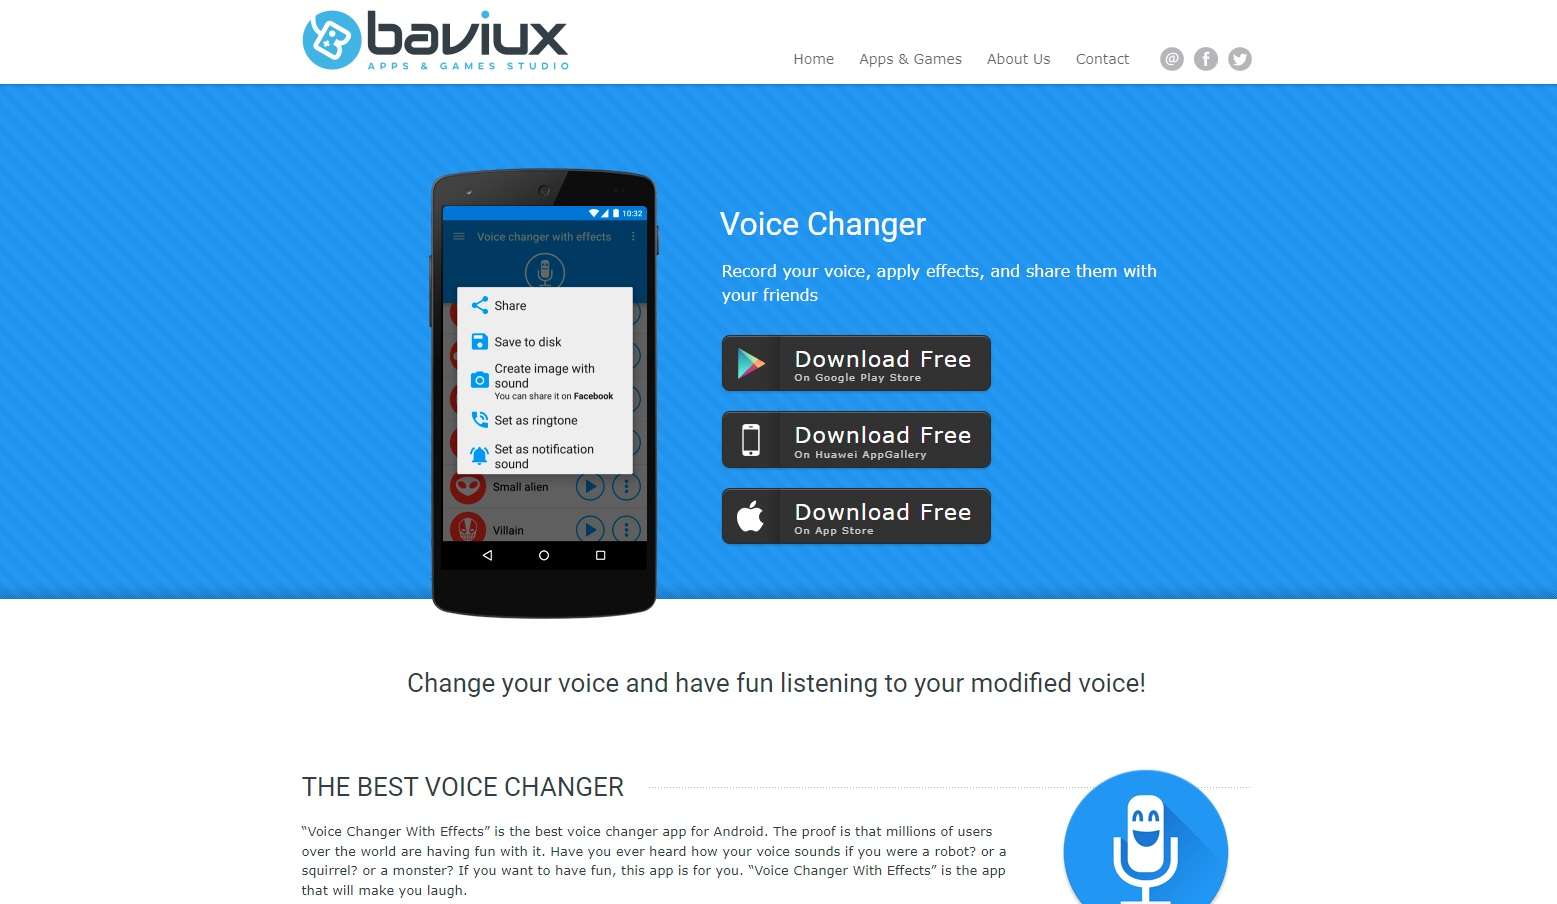 Baviux voice changer app